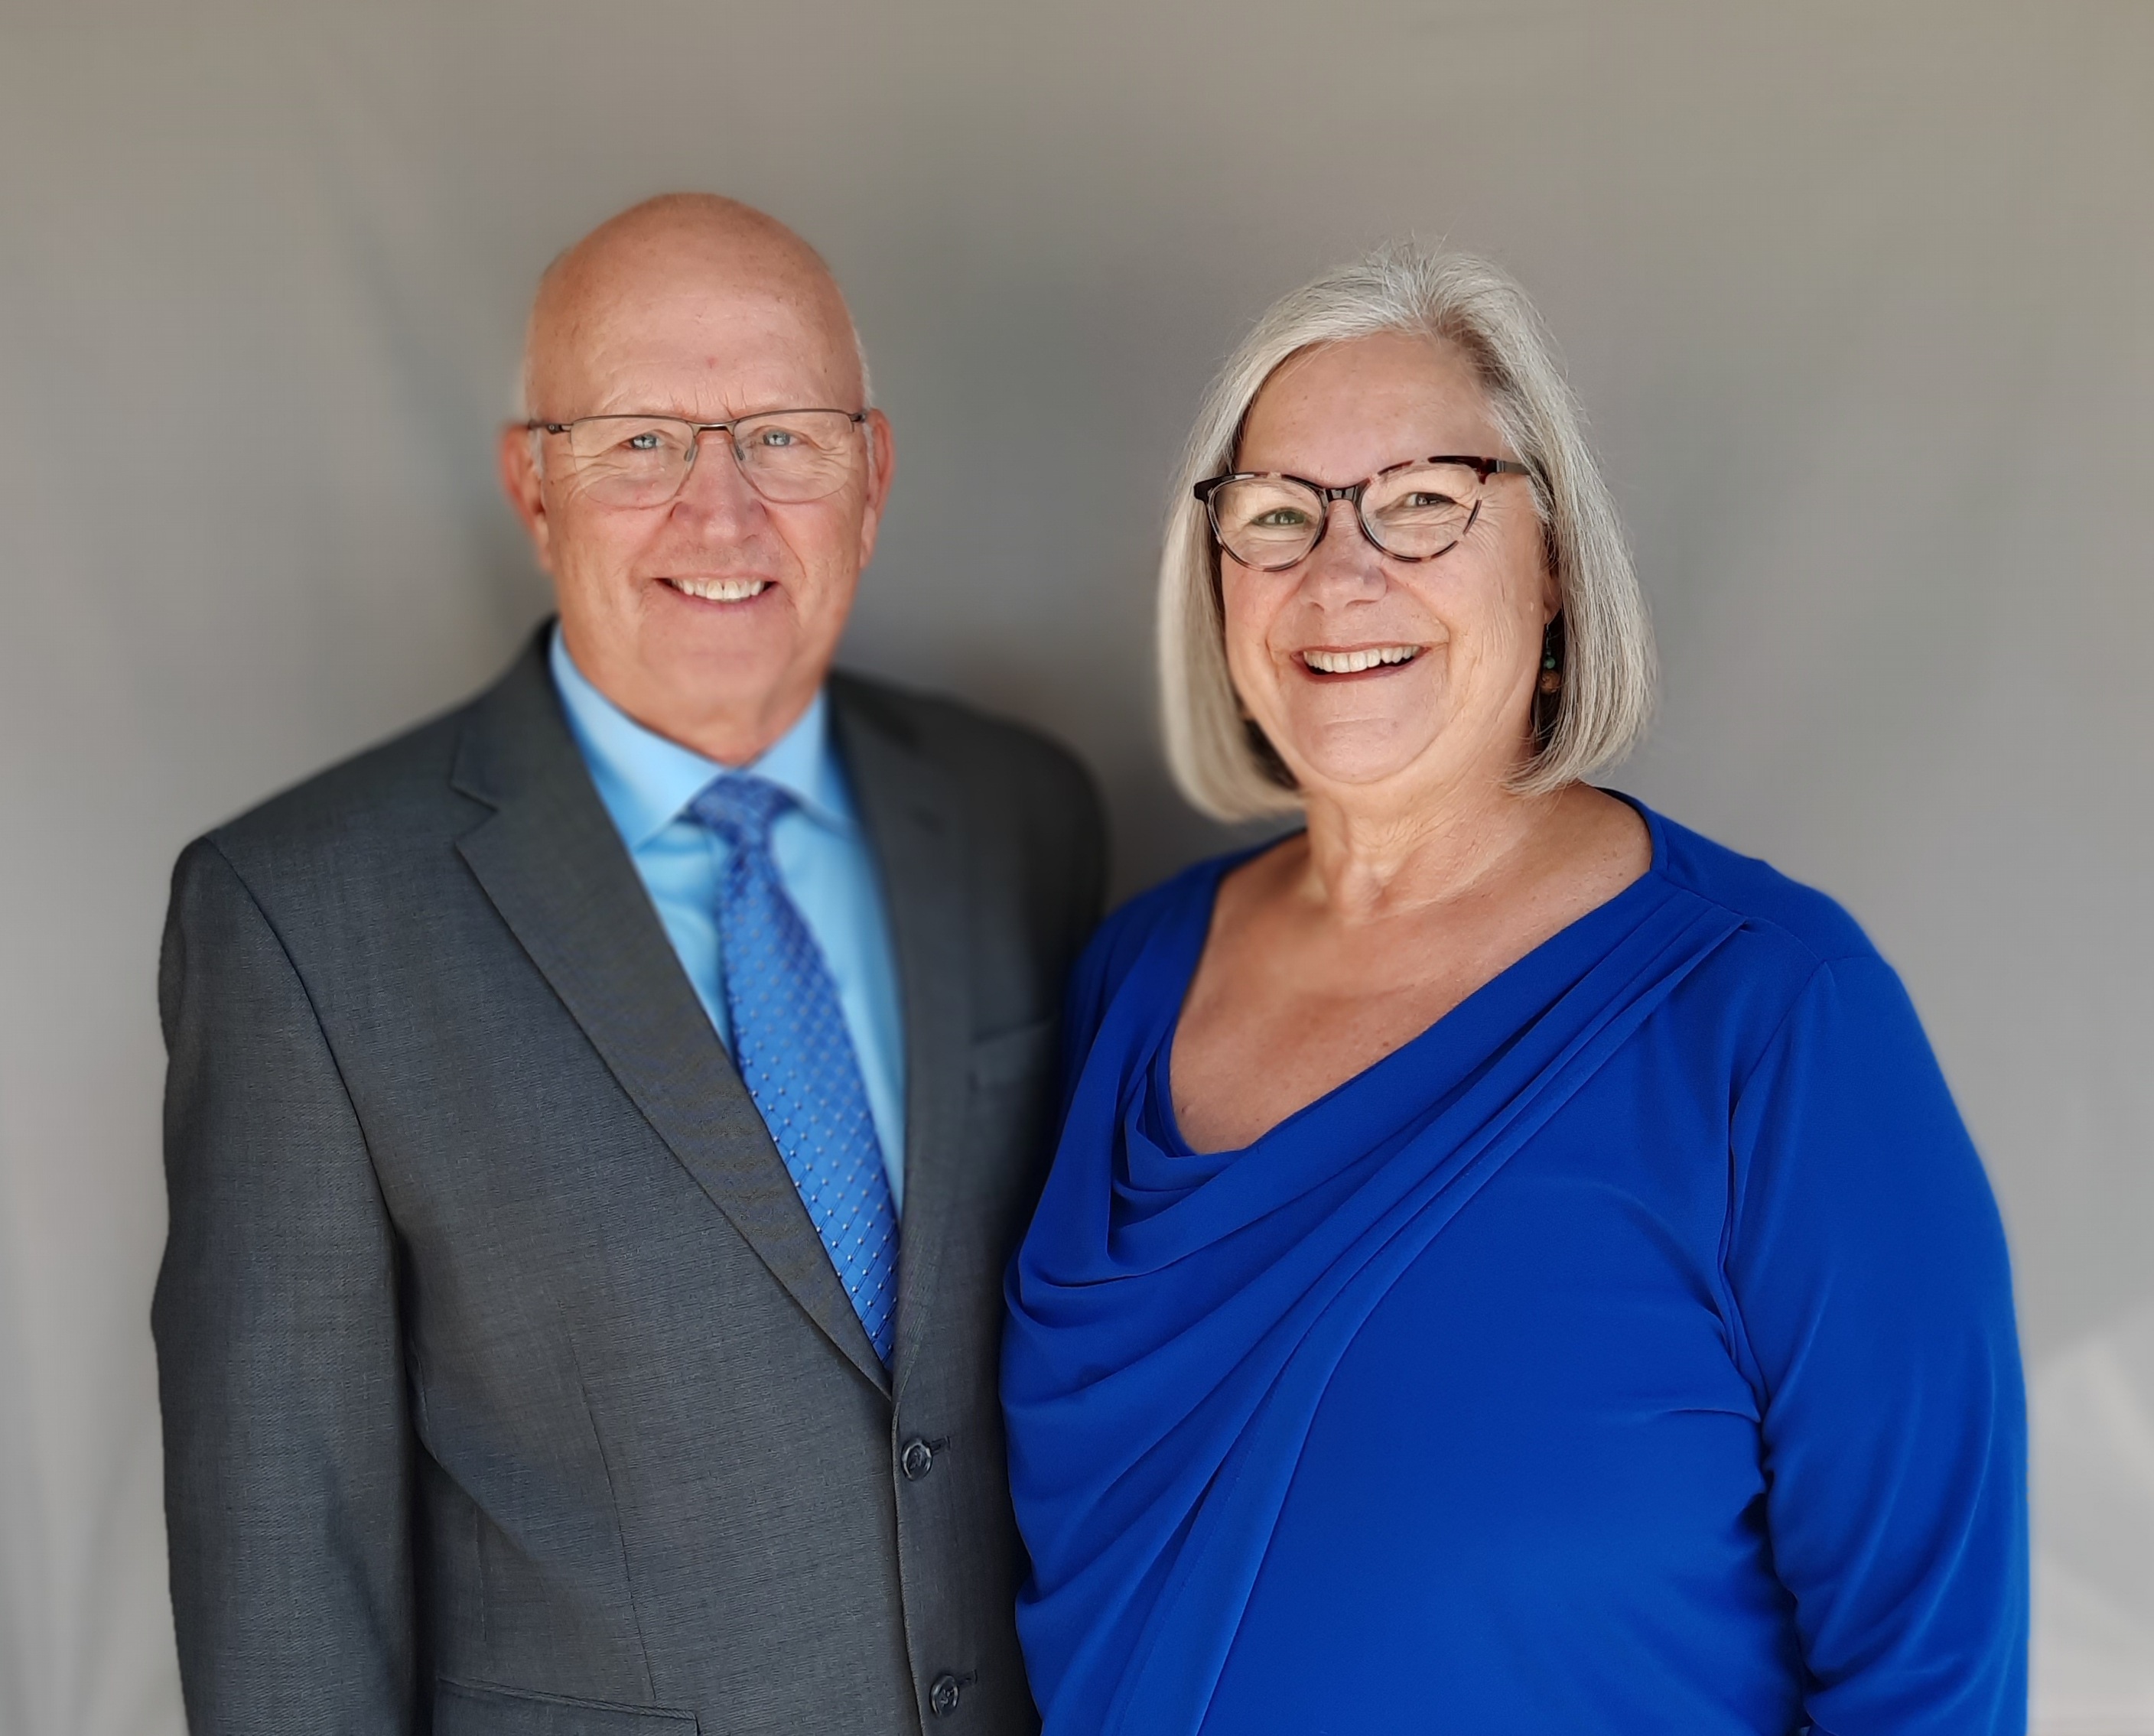 Bonvera Profile in Leadership: Ken & Kathy Herman